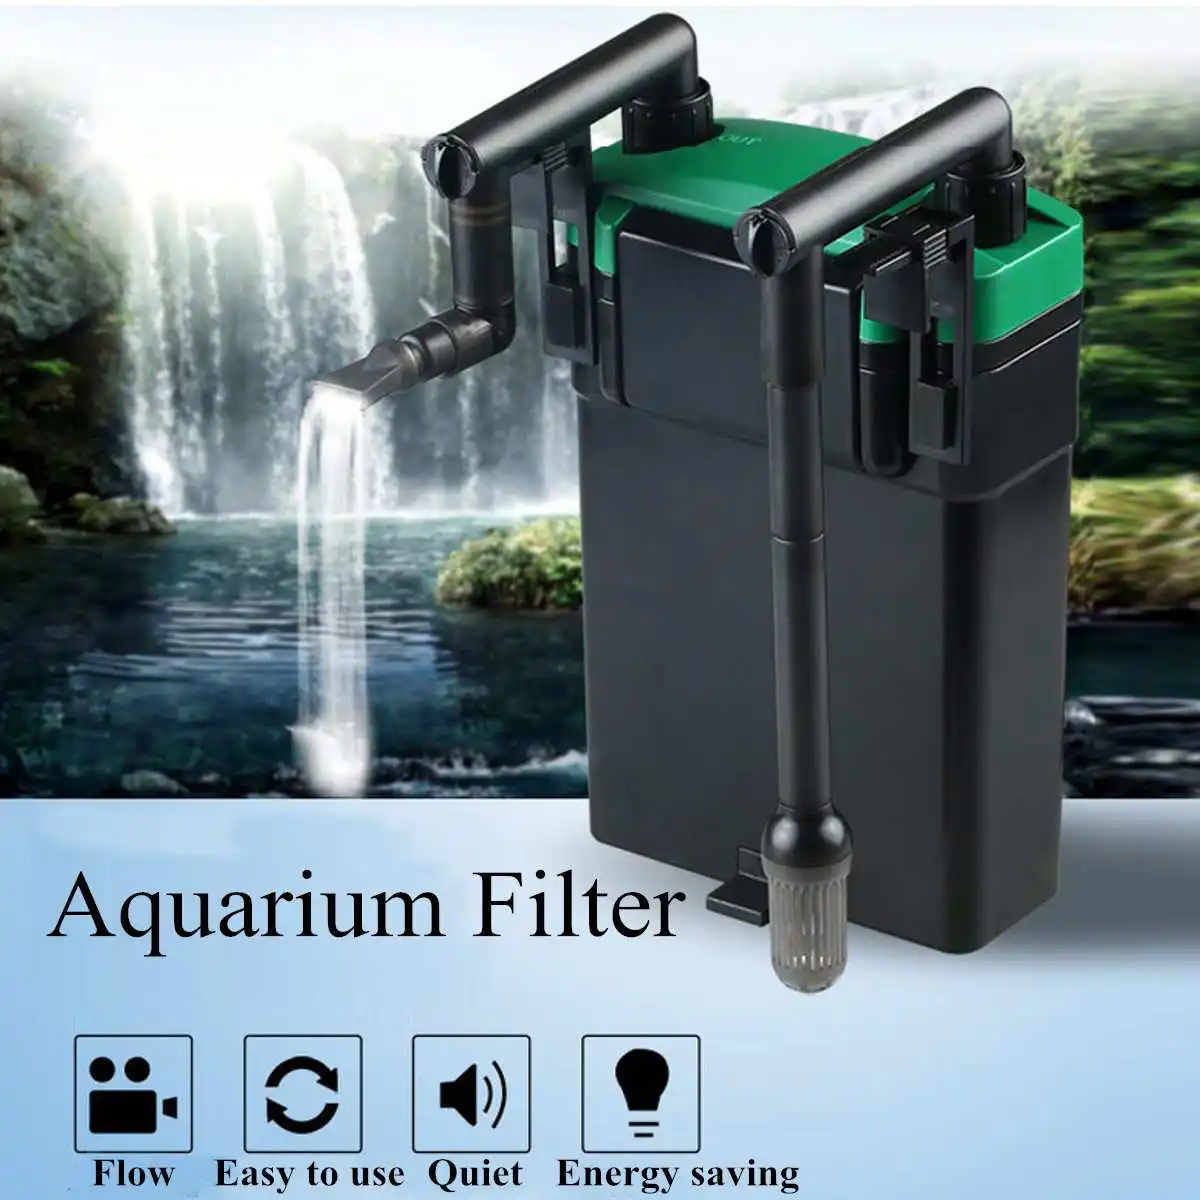 

Aquarium Filter For Fish Mini Aquarium Water Pumps 220V External Hang Up Oxygen Submersible Water Purifier Small Waterfall Maker